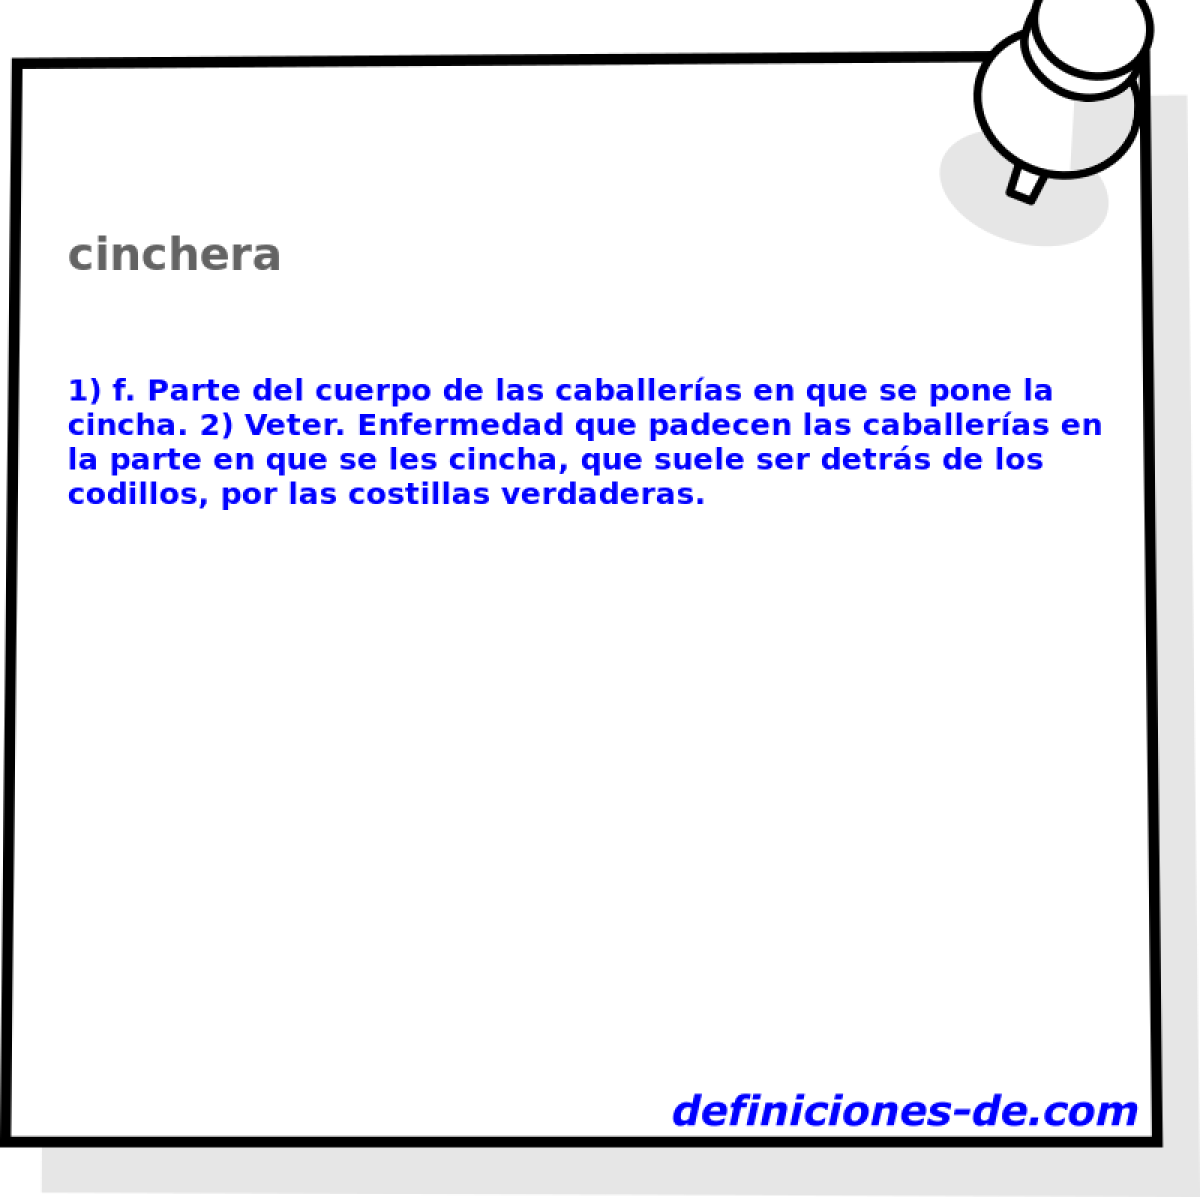 cinchera 